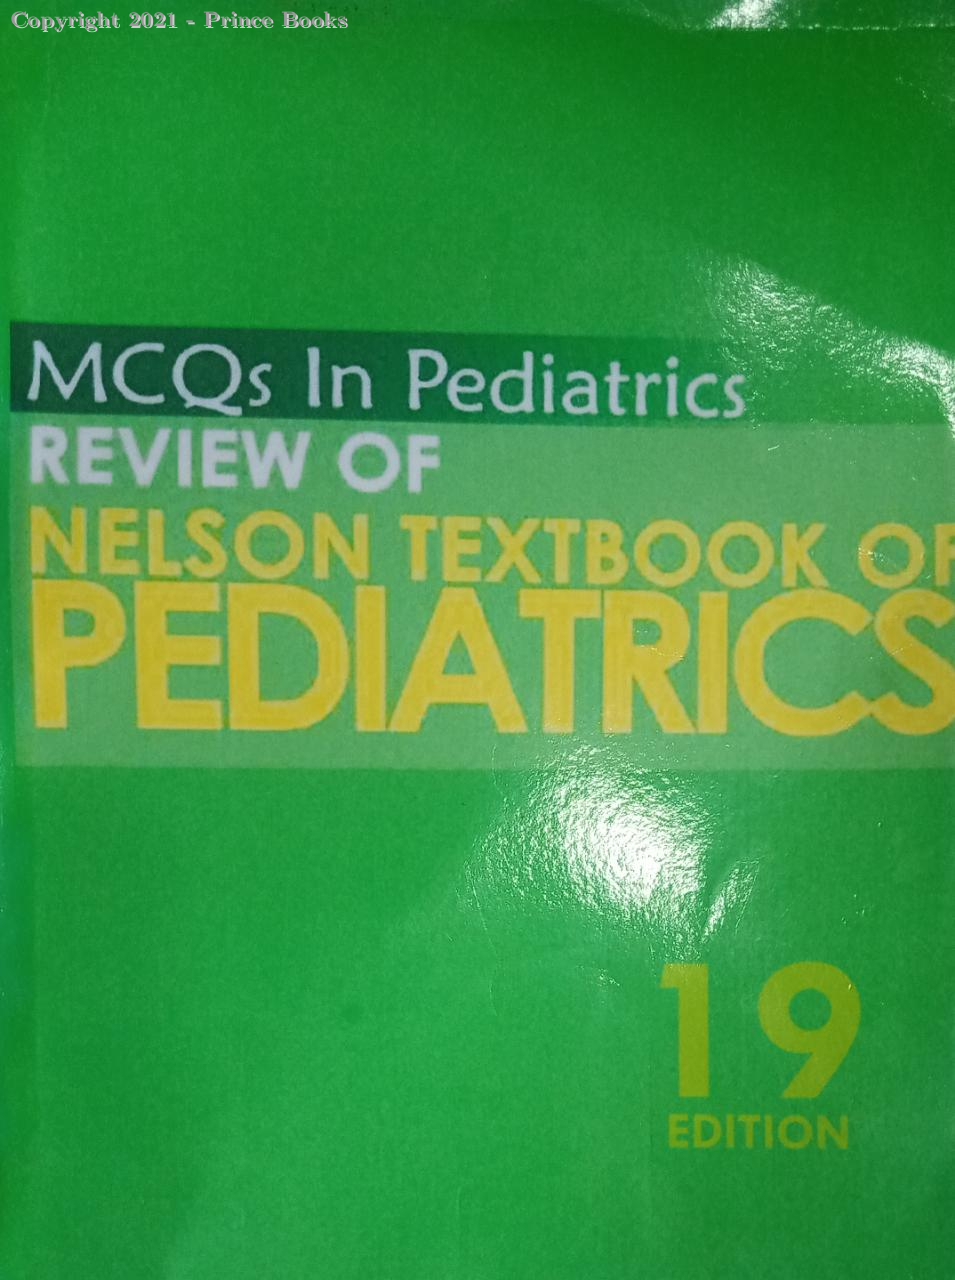 MCQs in Pediatrics Review of Nelson Textbook of Pediatrics, 19e